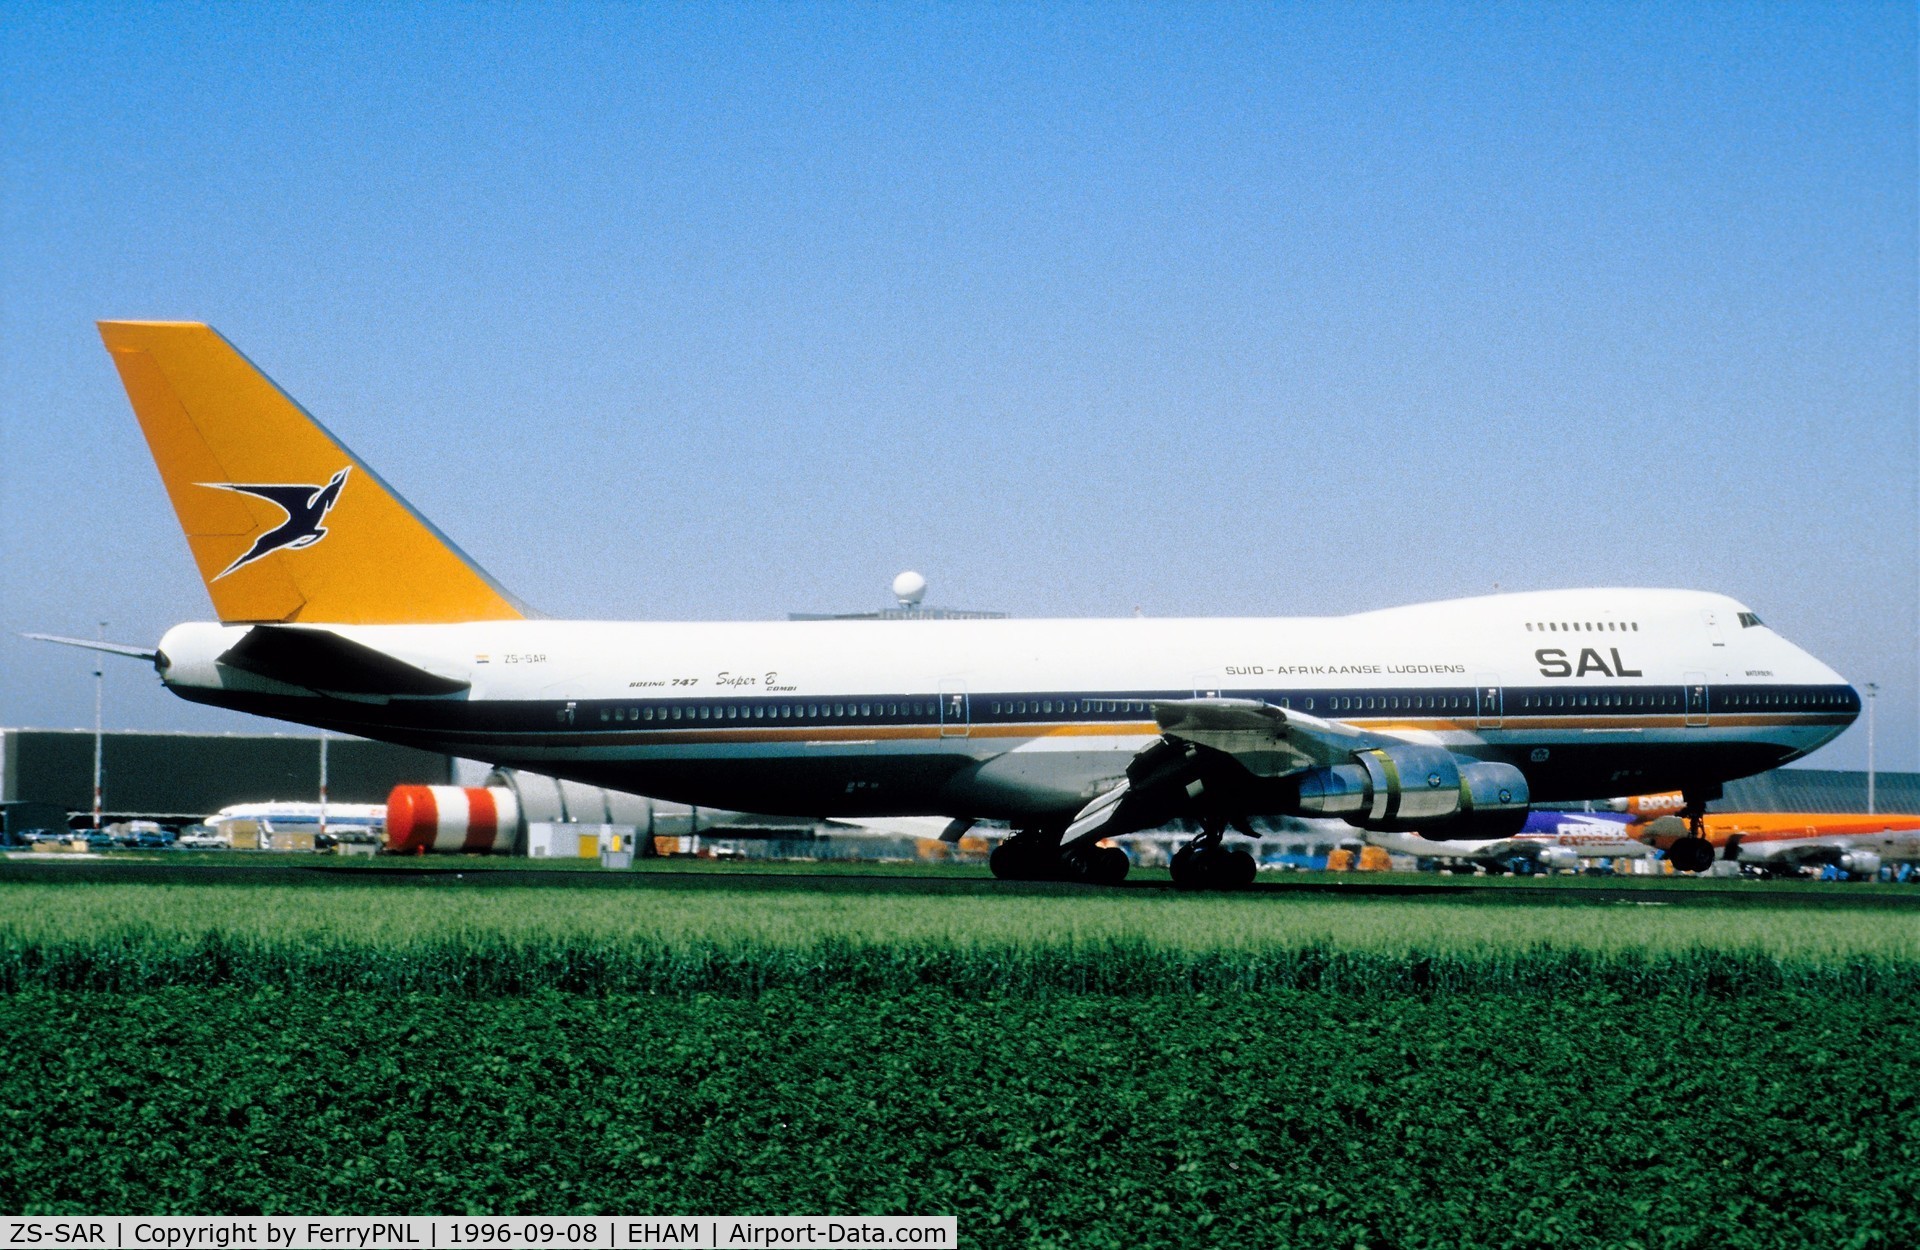 ZS-SAR, 1980 Boeing 747-244B/SF C/N 22170, South African B742 landing